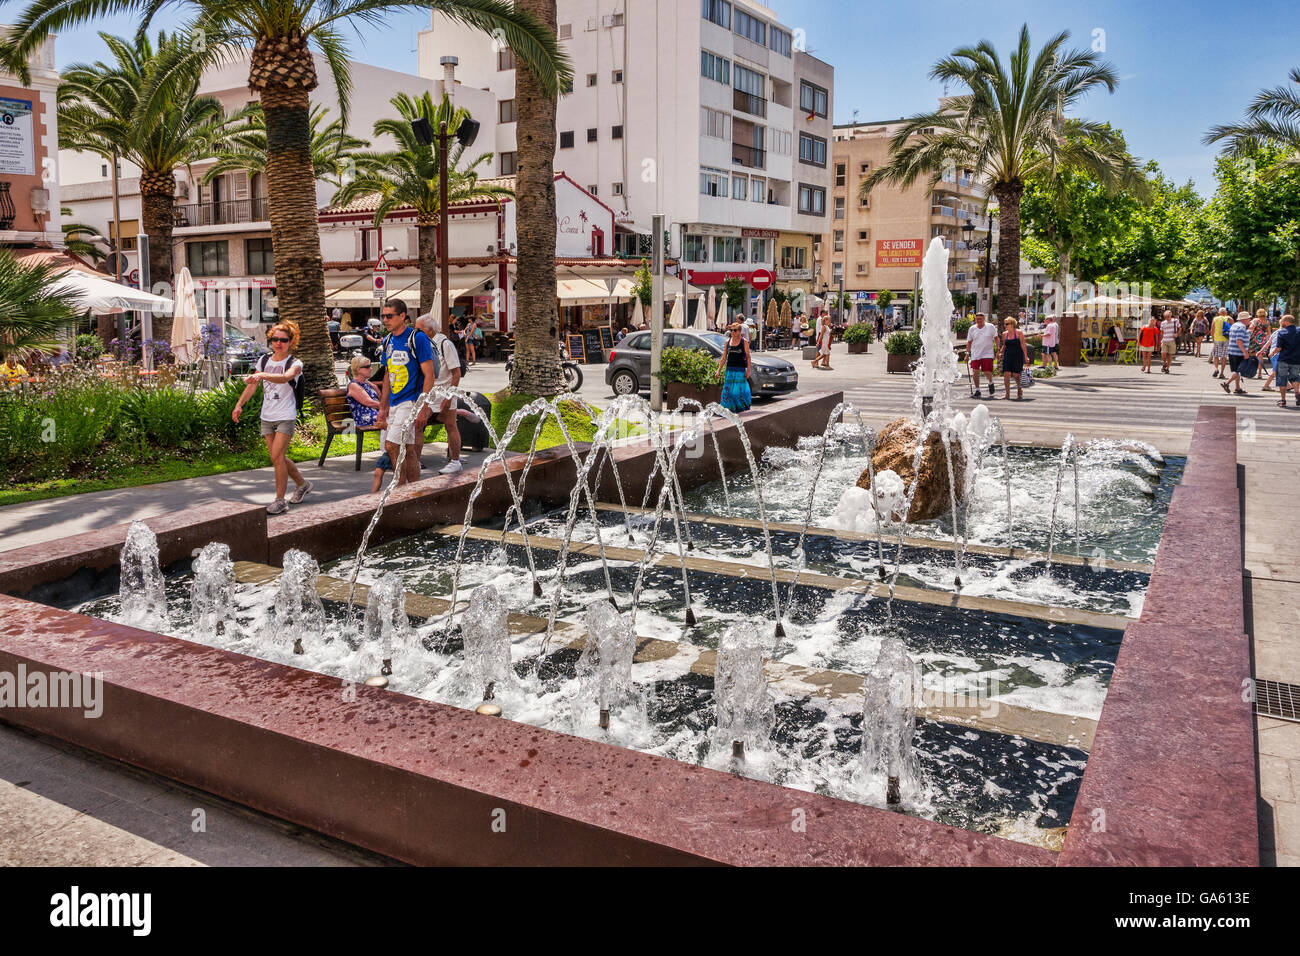 Fountain in the centre of Santa Eularia, Ibiza, Spain Stock Photo